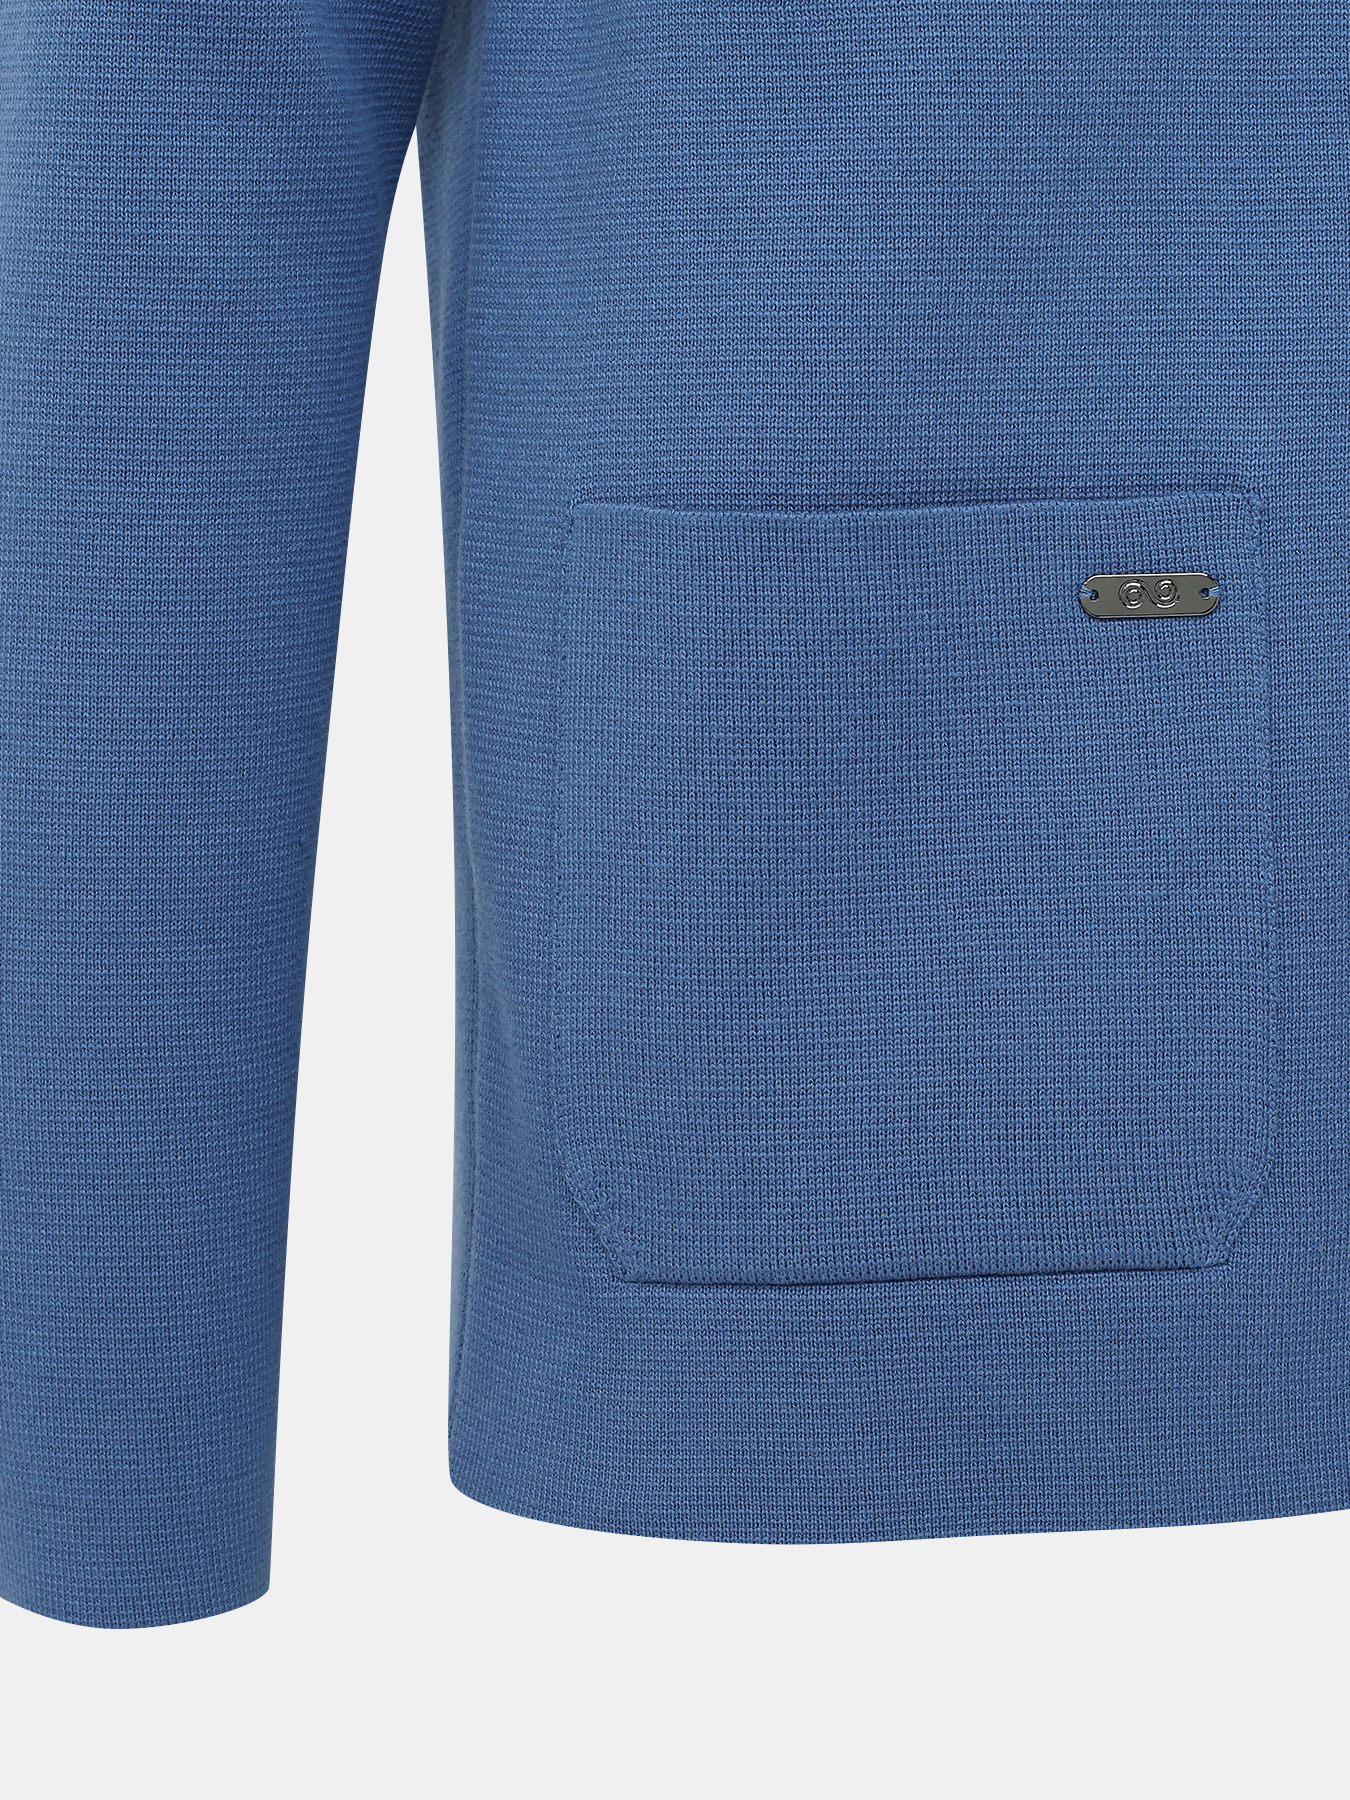 Пиджак Alessandro Manzoni 397142-025, цвет синий, размер 48 - фото 2